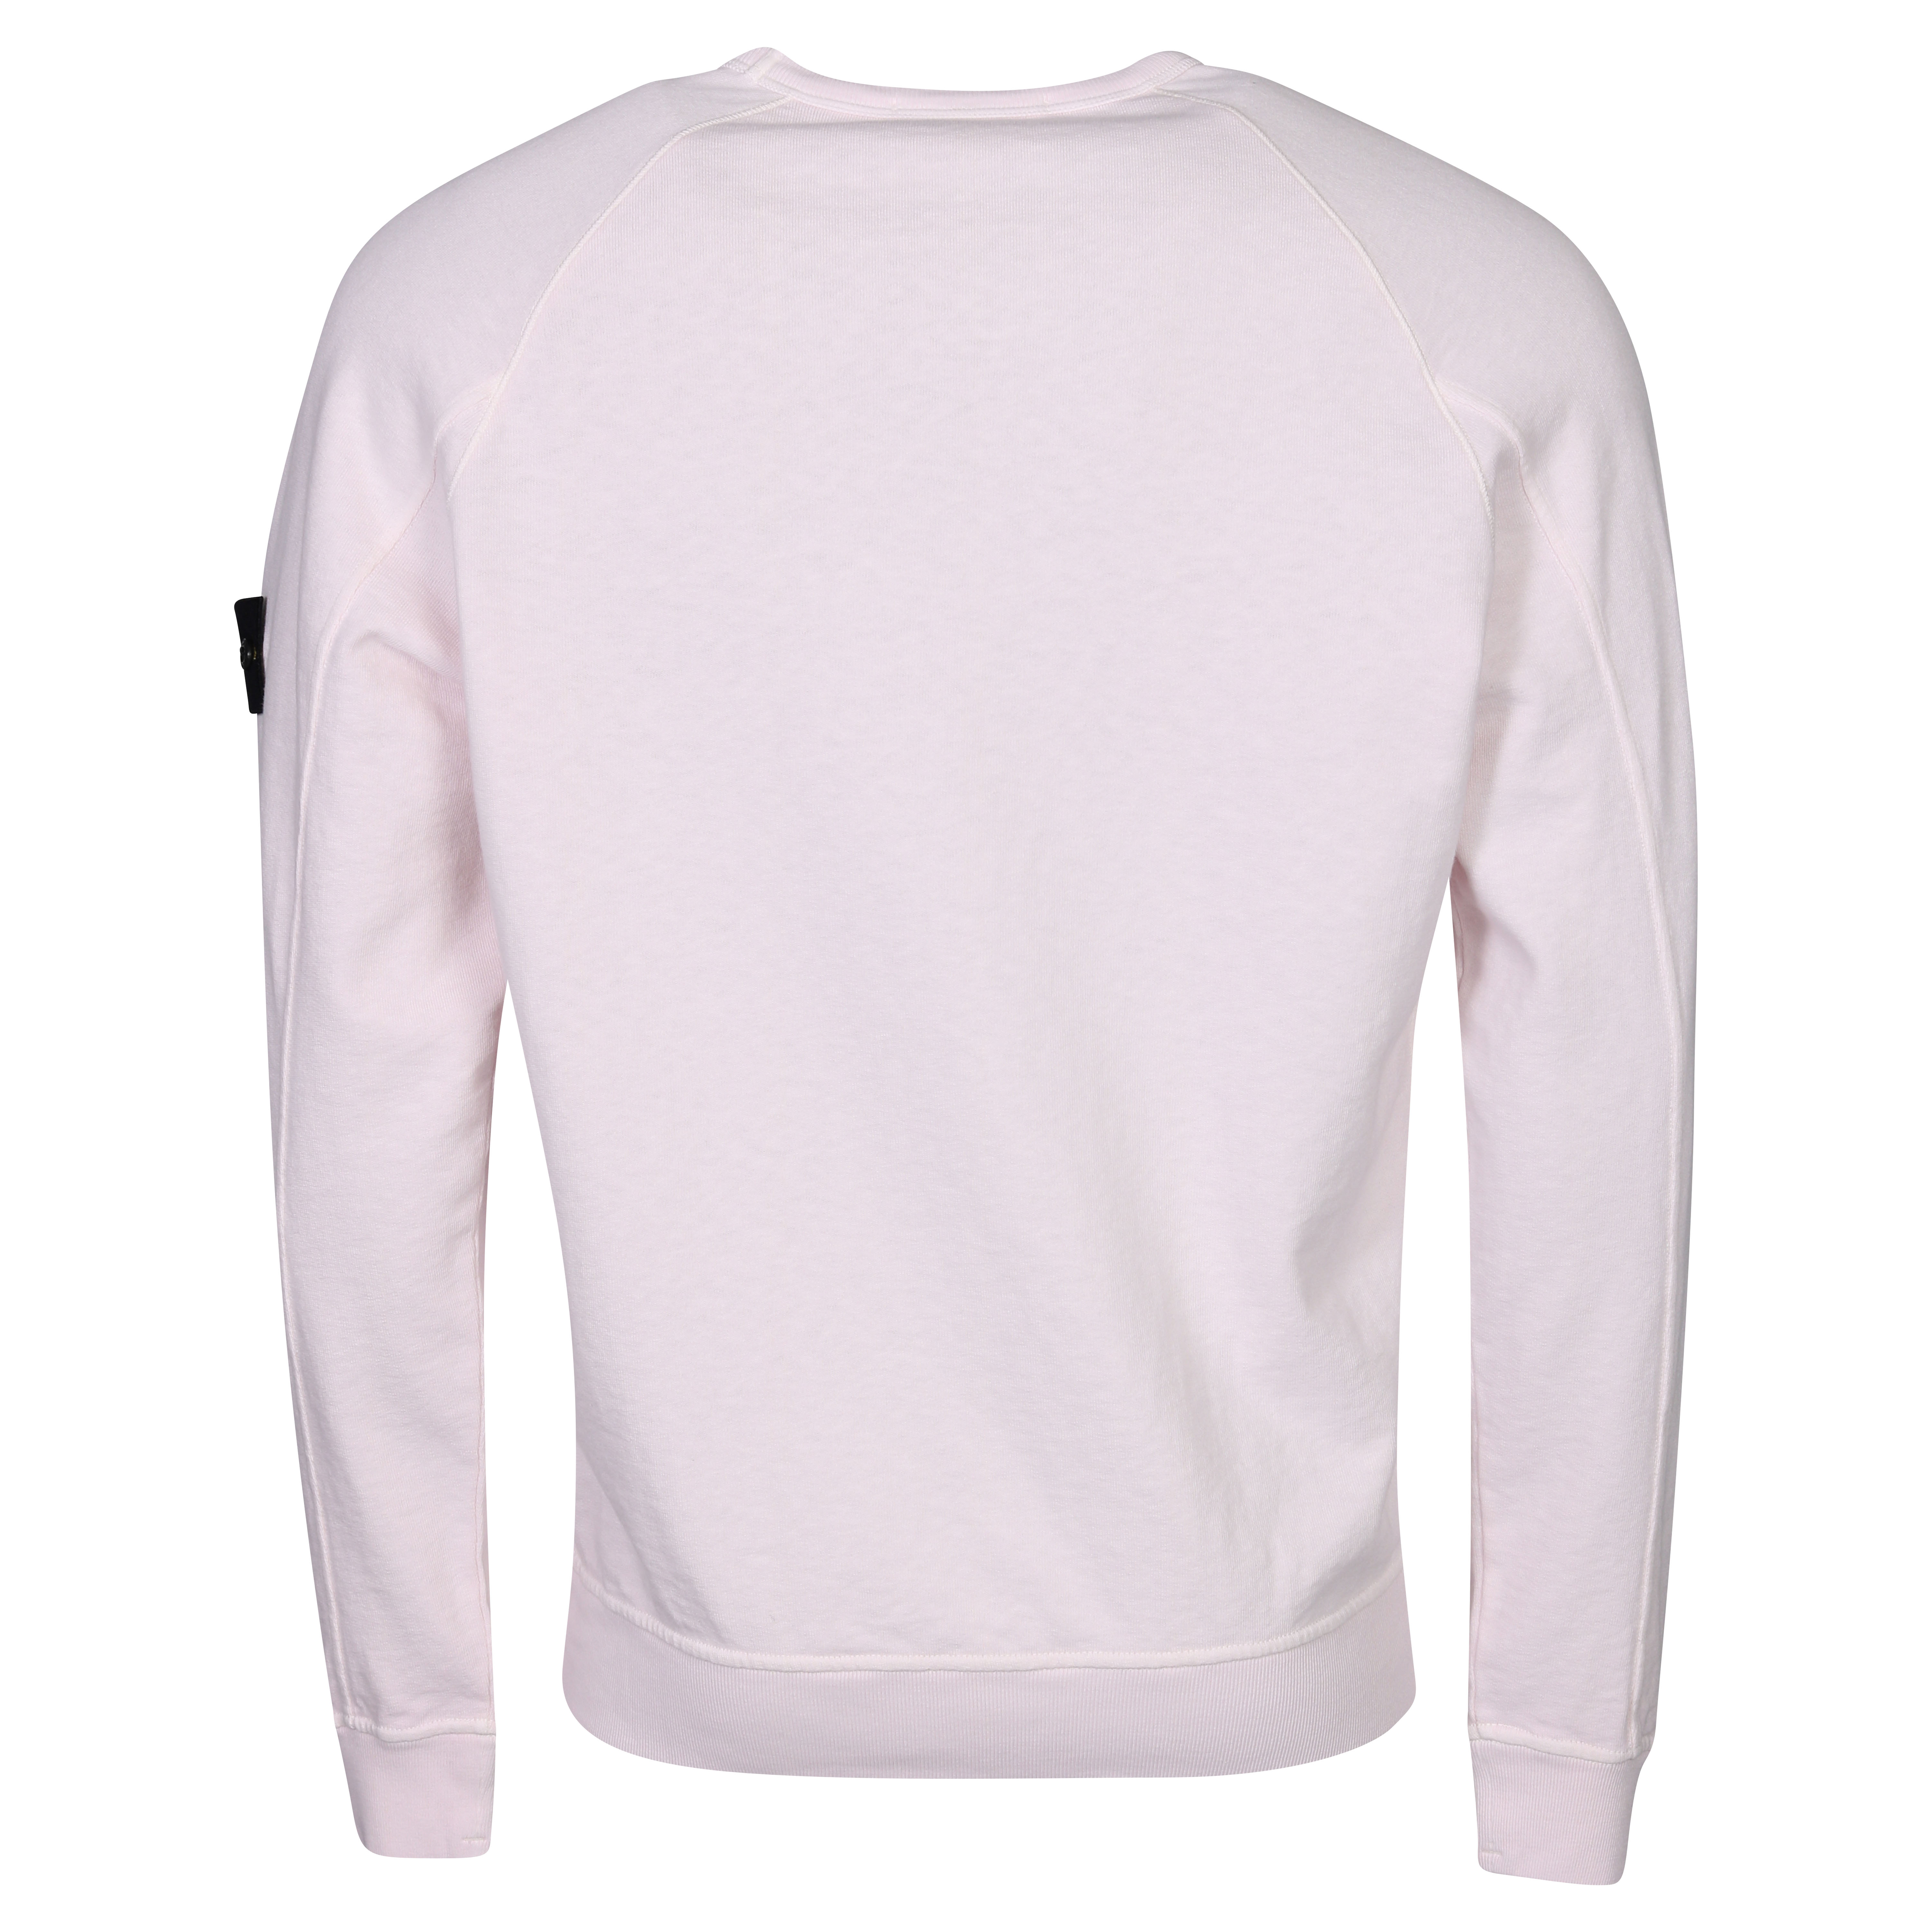 Stone Island Sweatshirt in Washed Light Pink S